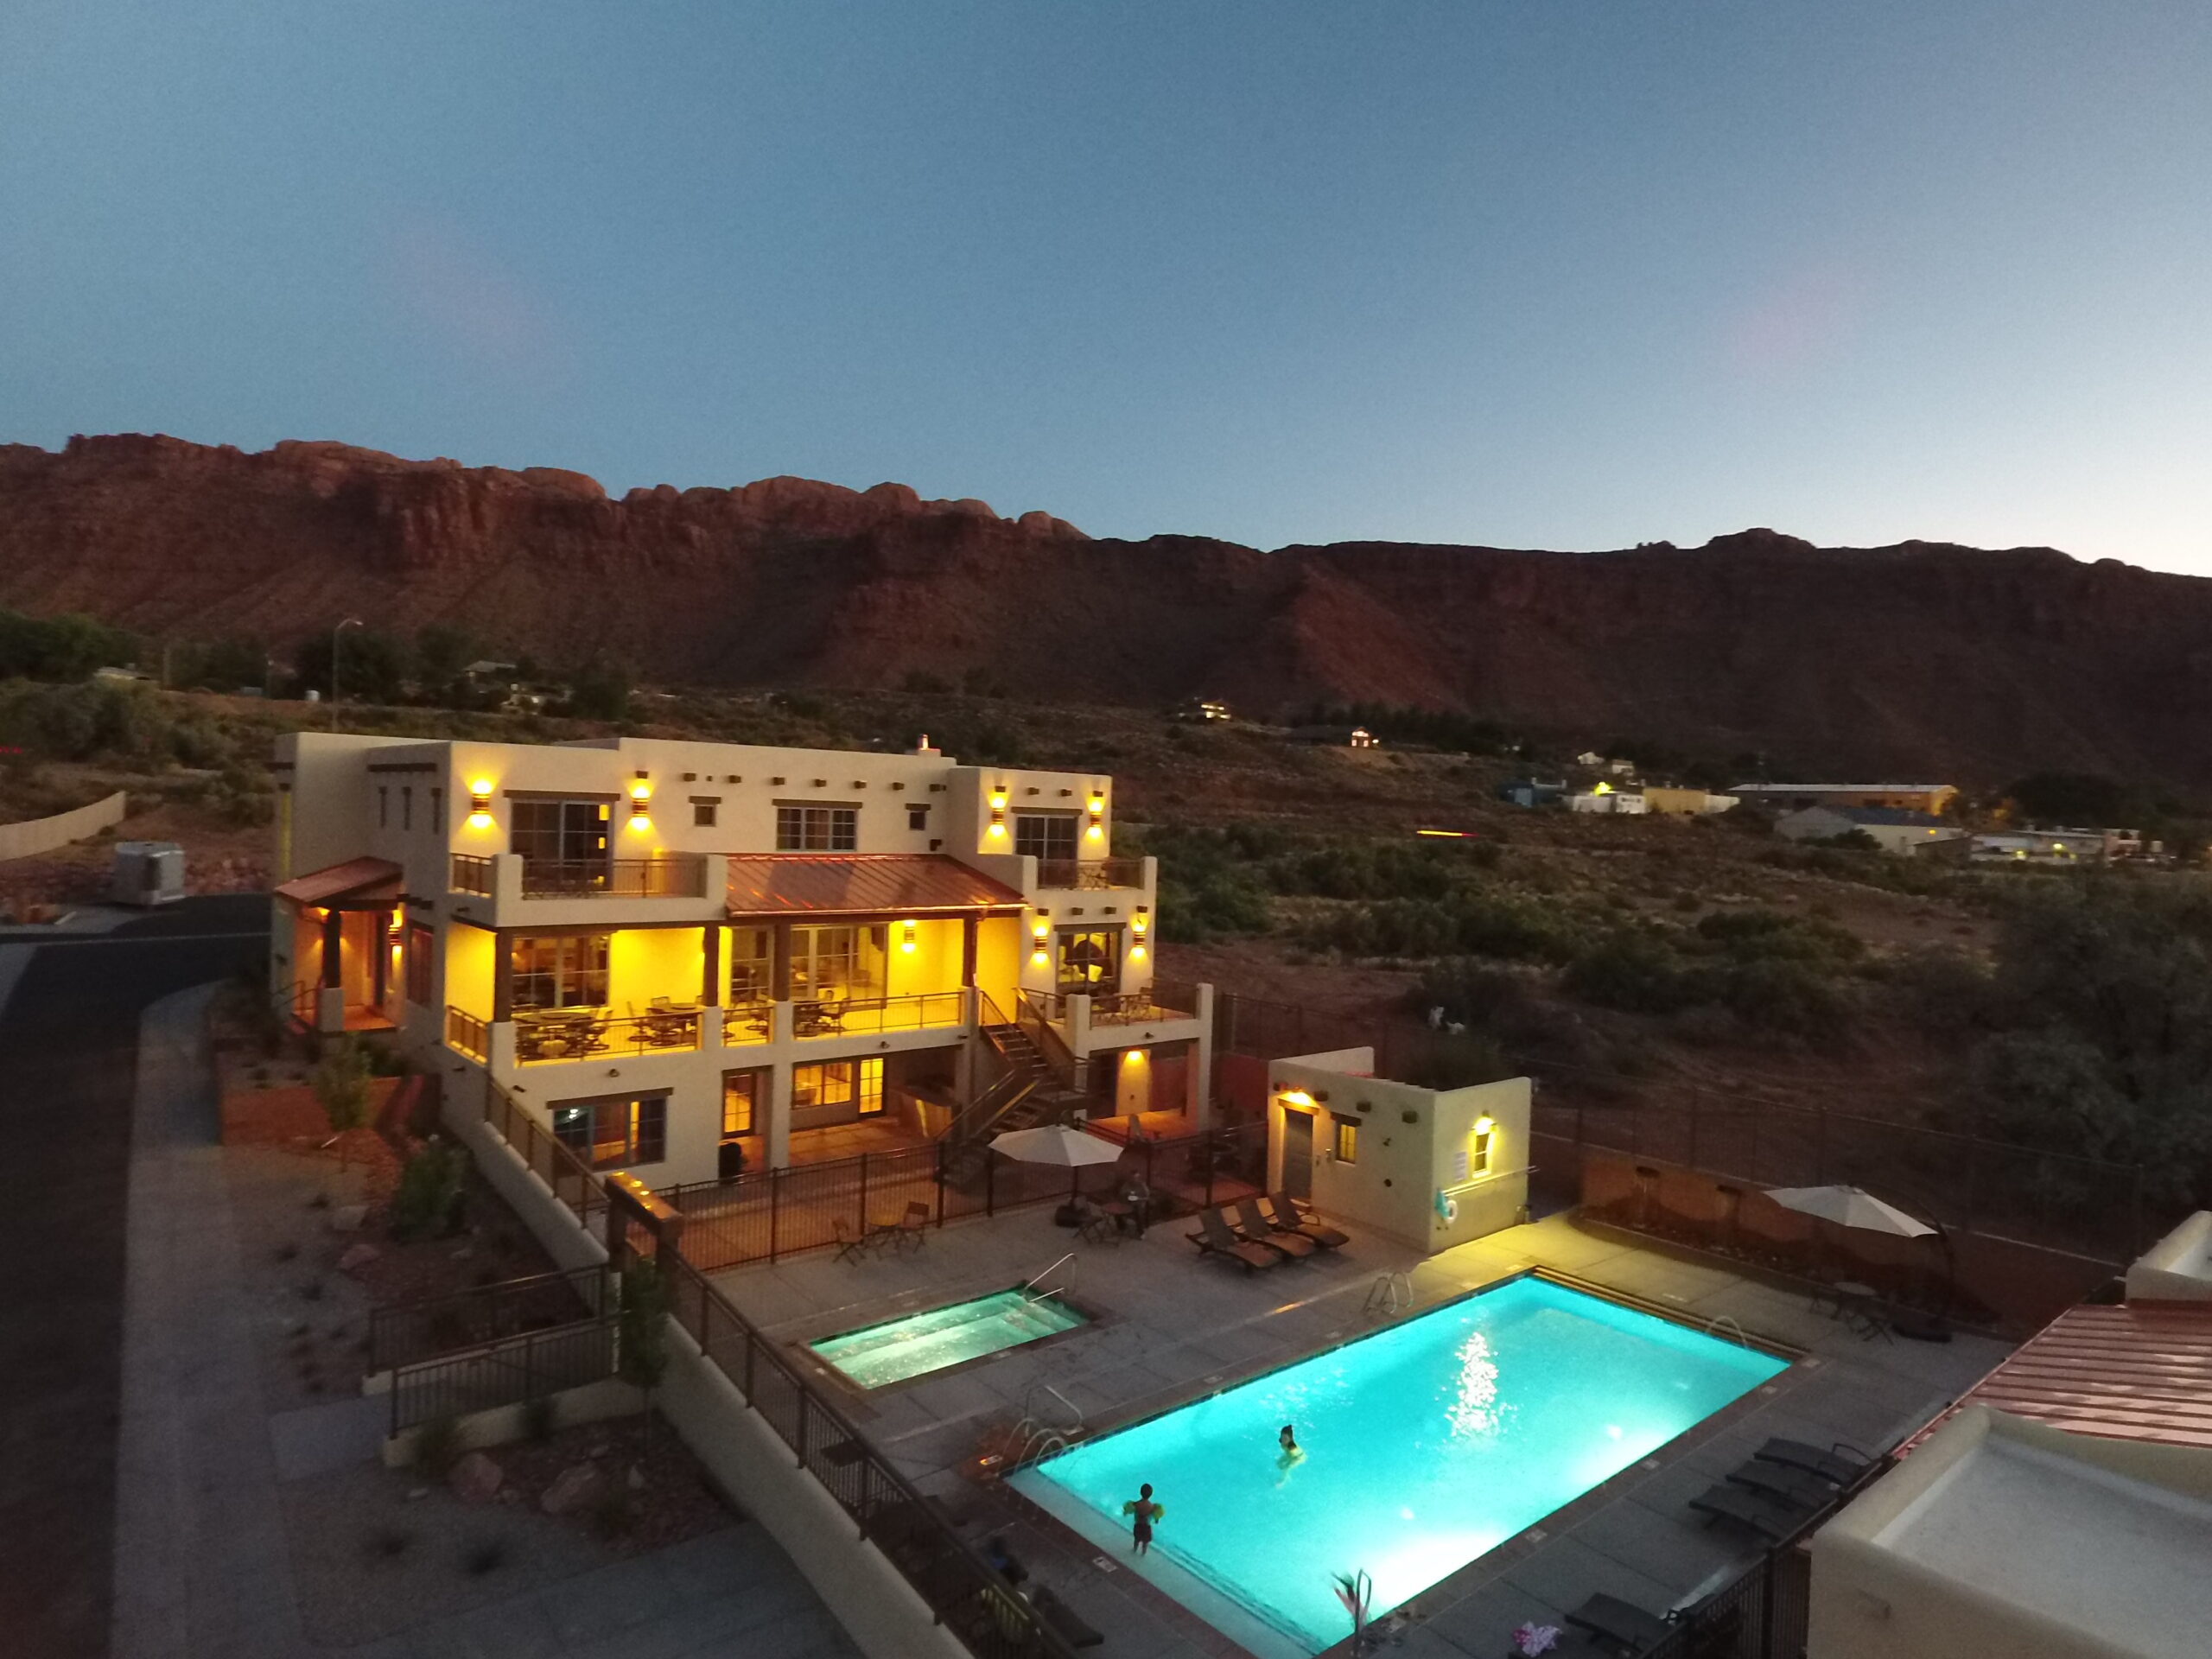 Moab Family Reunion Lodge and Pool